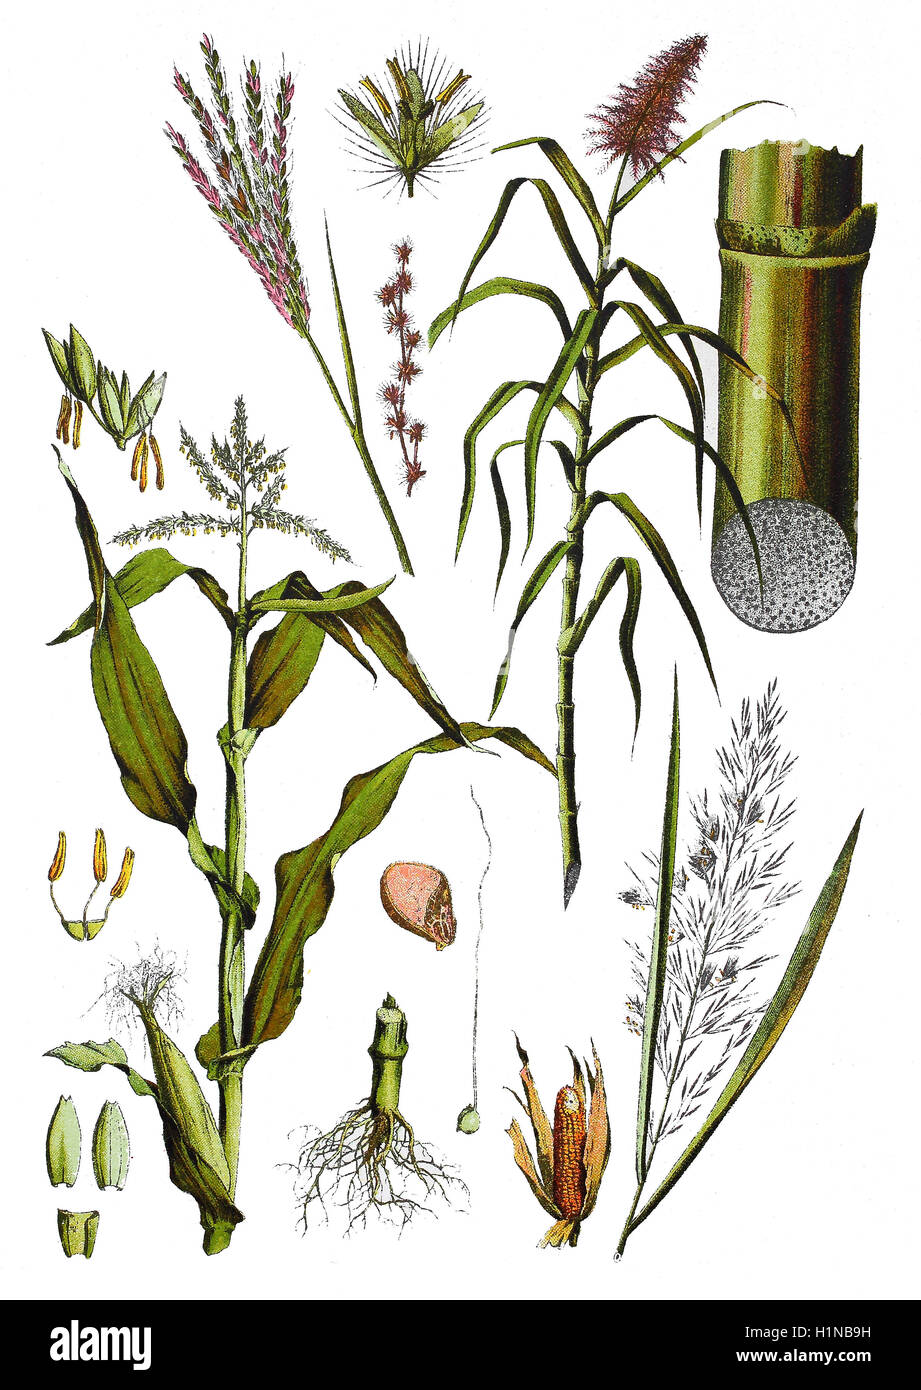 'Maize, corn, Zea mays (left), Sugarcane, Saccharum officinarum (right top), Phragmites australis, Cav. Trin.; Syn.: Phragmites communis Trin. (right bottem), Bothriochloa ischaemum L. auch Andropogon ischaemum L. bzw. Dichanthium ischaemum L (top left)' Stock Photo